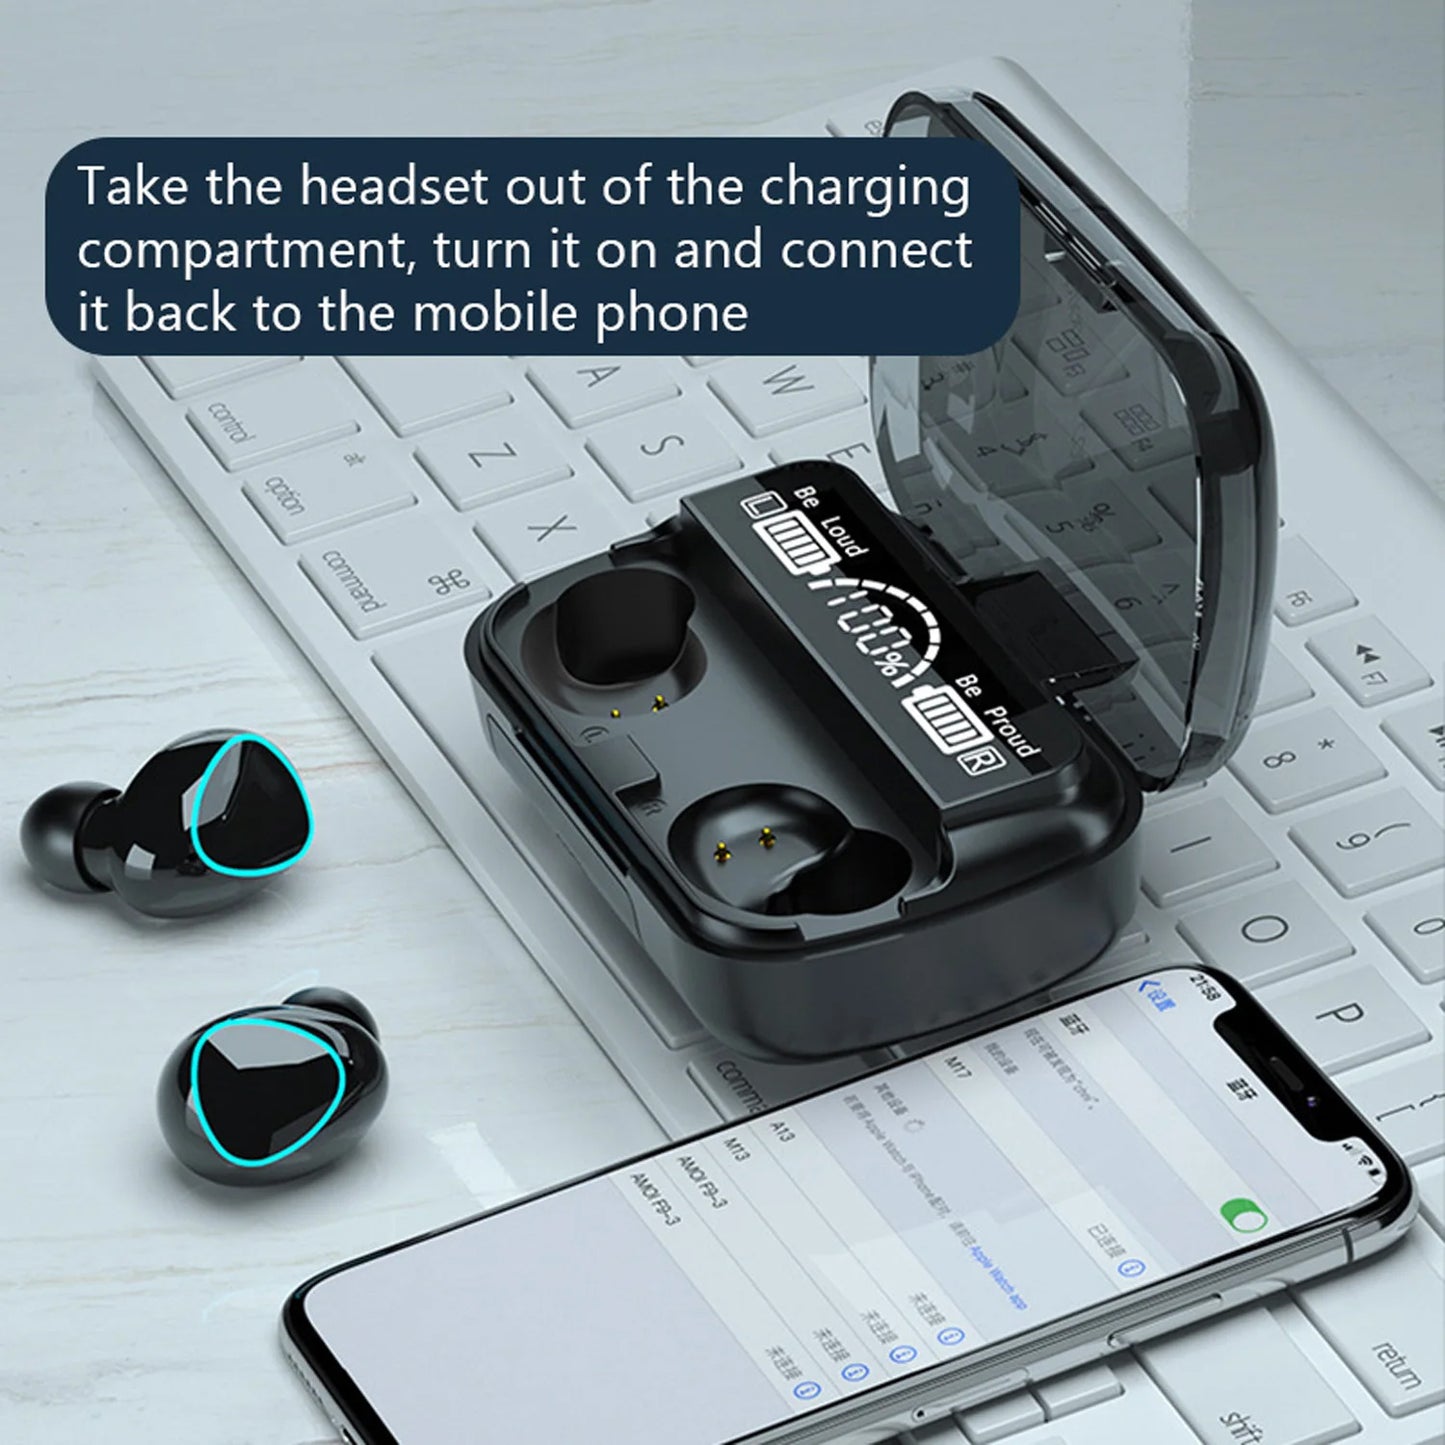 M10 TWS Wireless Bluetooth Earbuds